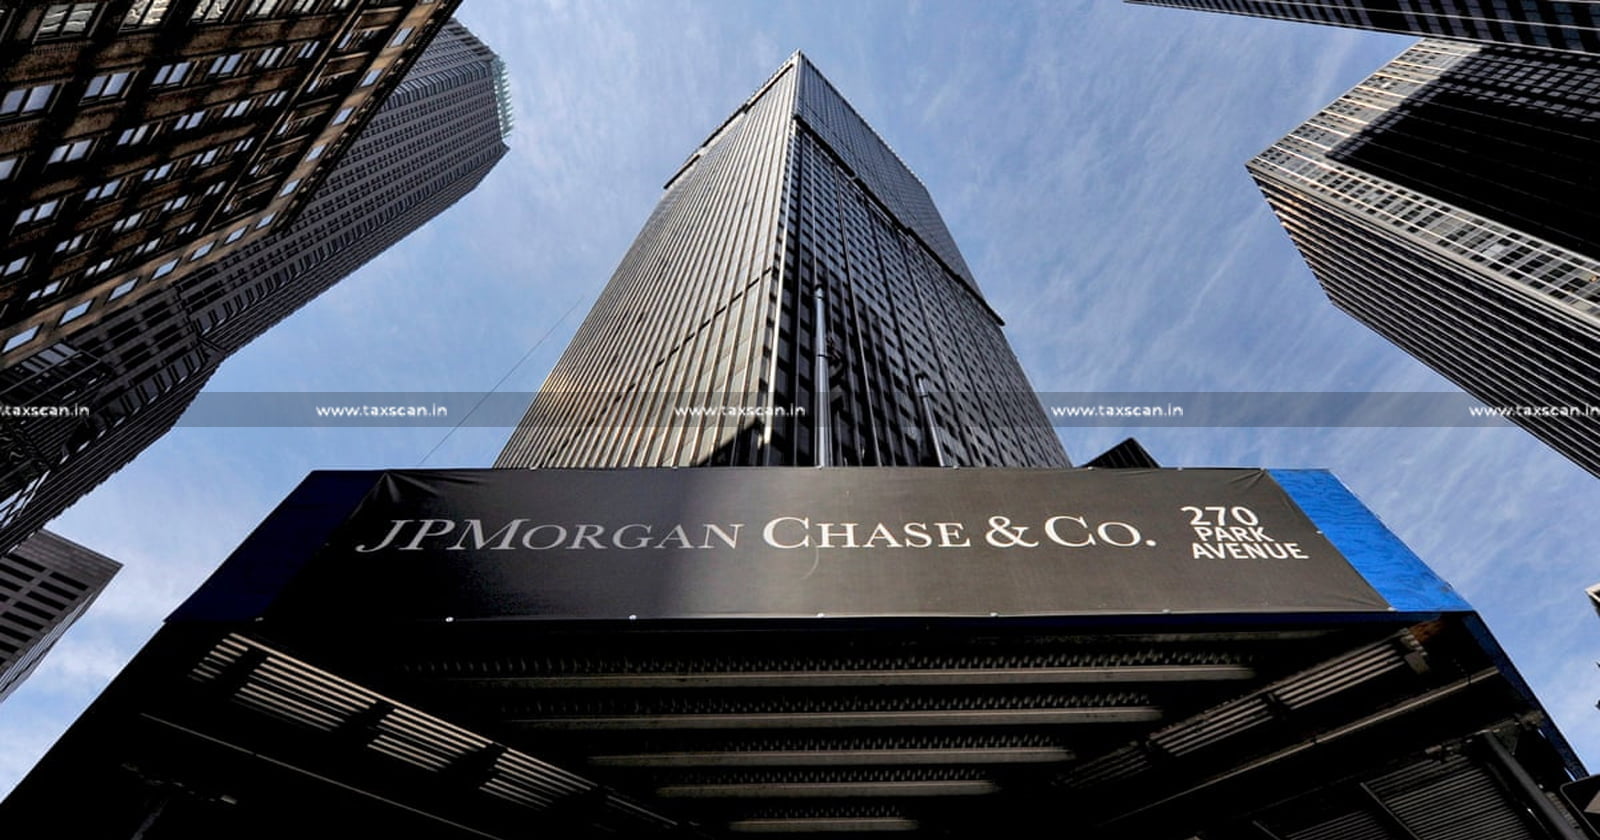 B - Com - Vacancy - JP - Morgan - Chase - Co - TAXSCAN